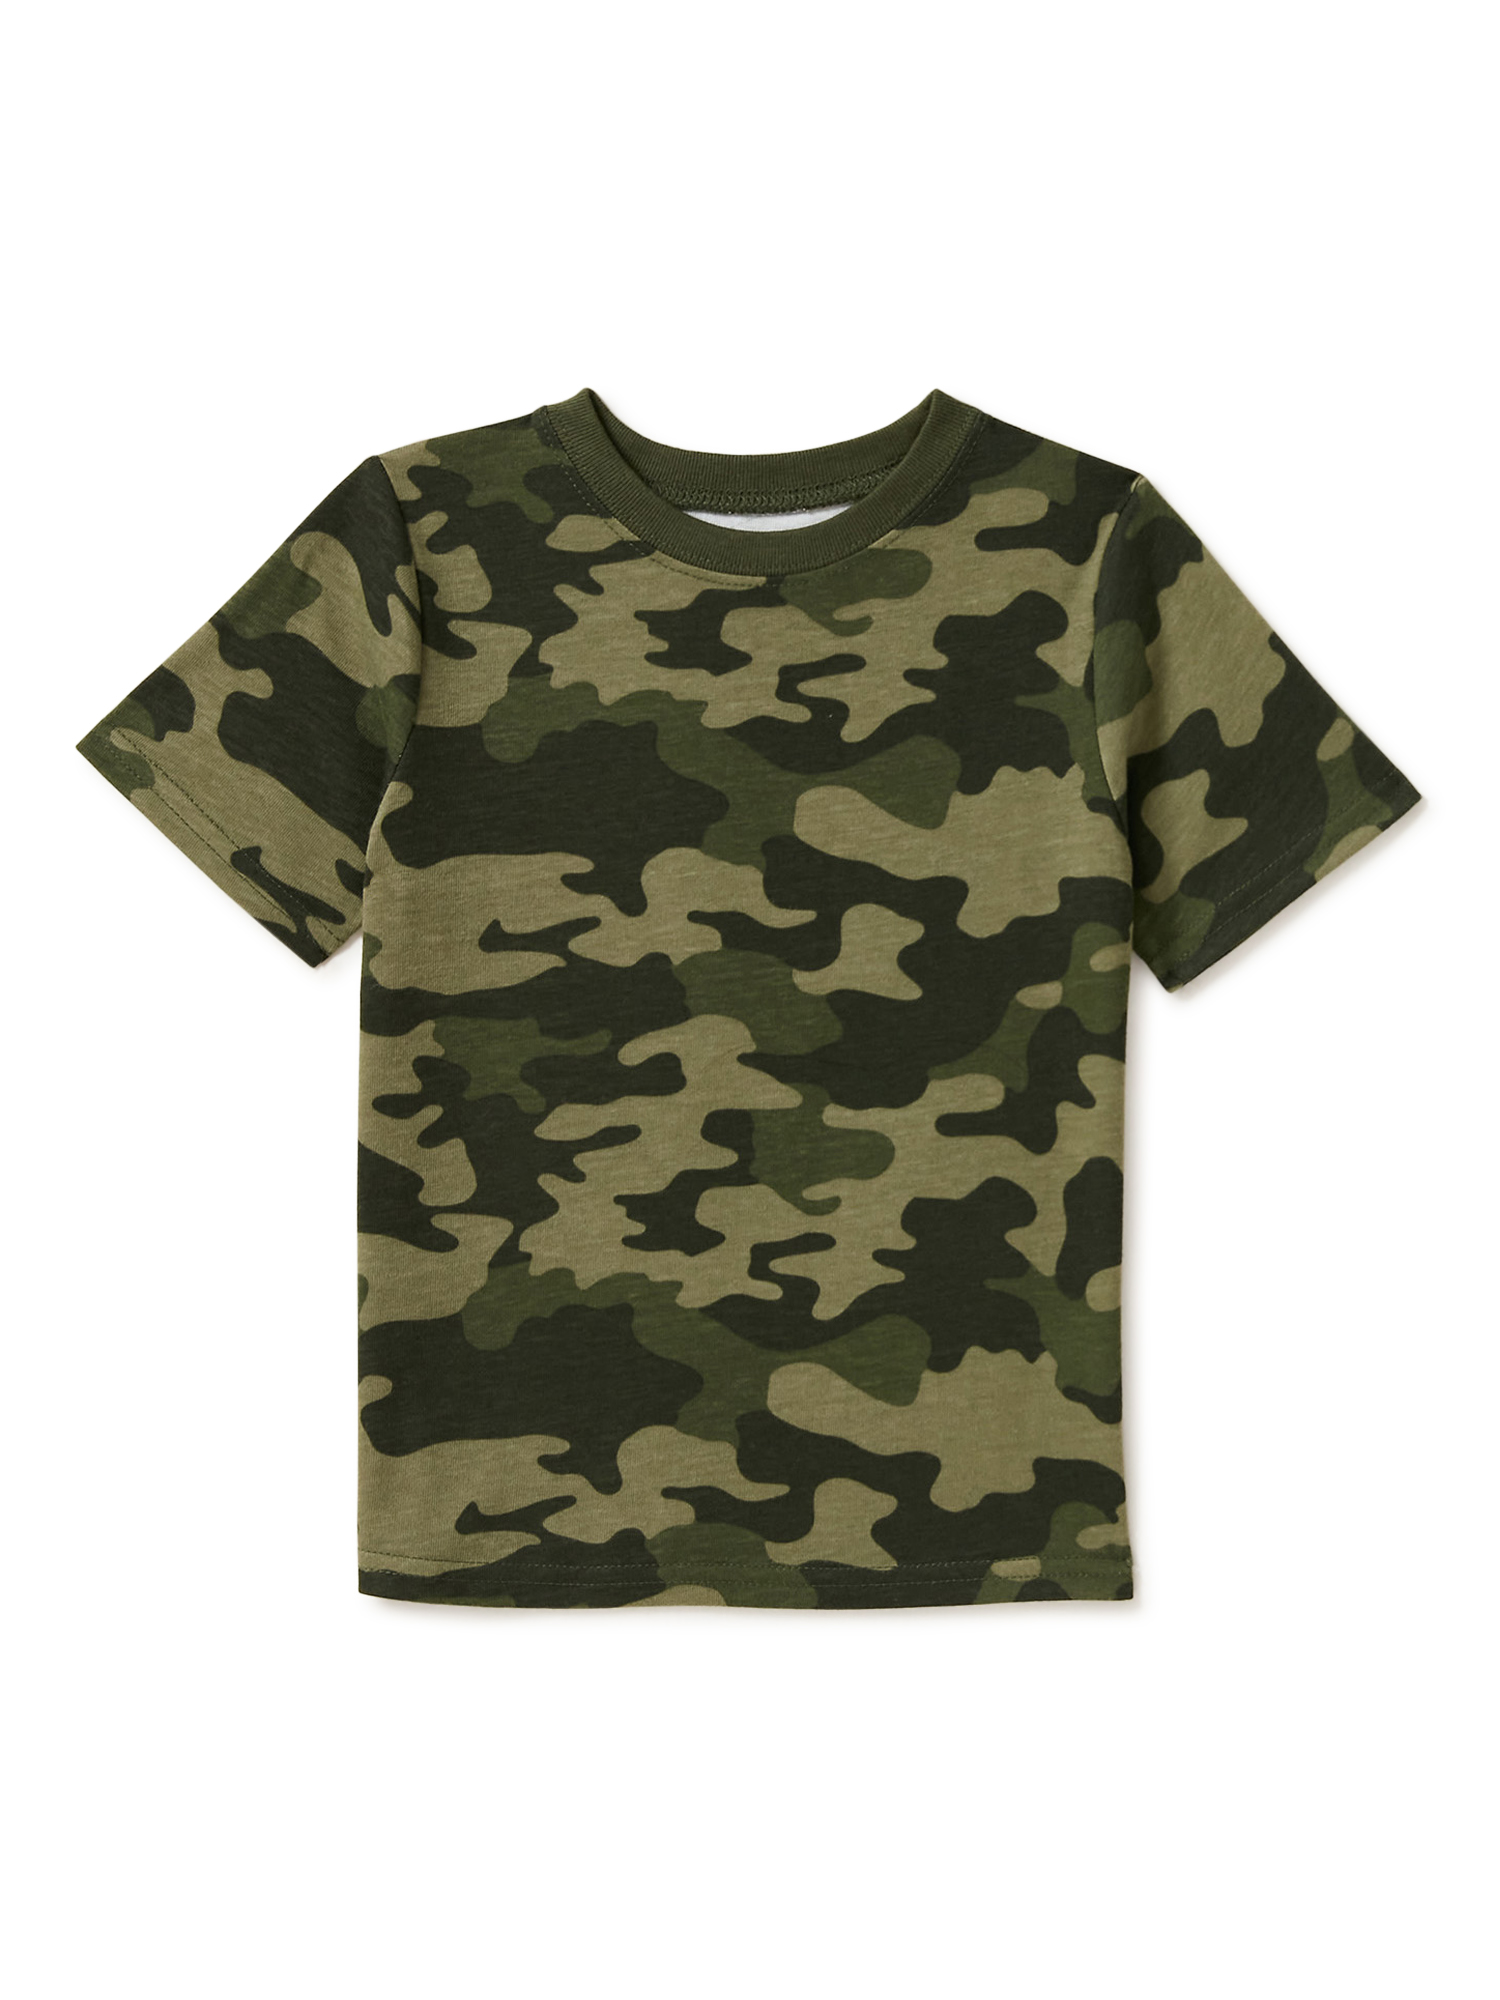 Garanimals Baby and Toddler Boy Camo Print Short-Sleeve T-Shirt, Sizes 12M-5T